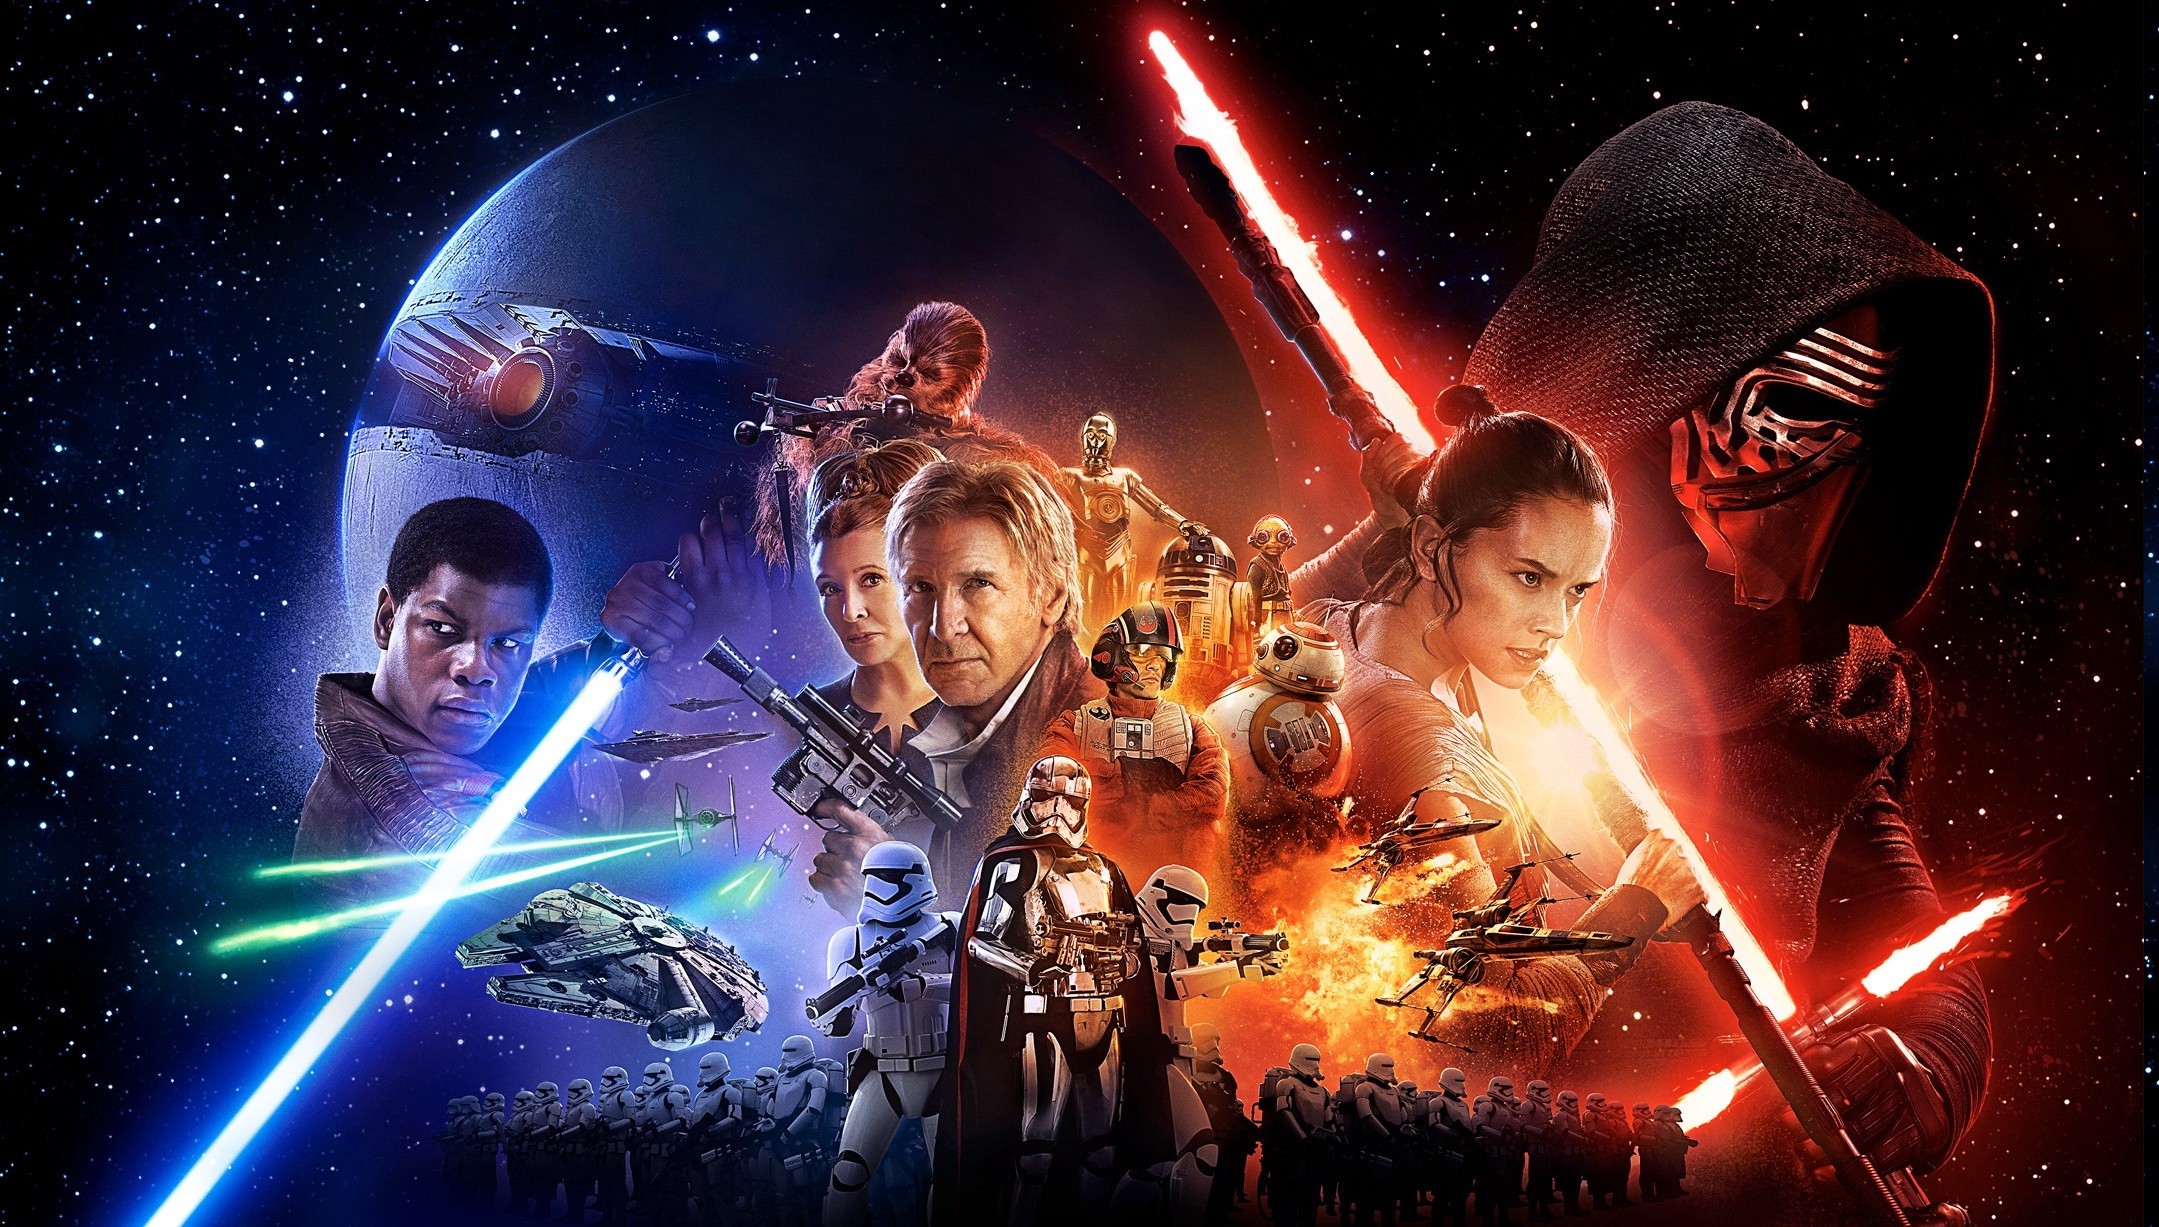 2159x1227 Star Wars, Star Wars: Episode VII The Force Awakens, Kylo Ren, Han Solo, BB  8, Chewbacca, Captain Phasma, R2 D2, C 3PO, Luke Skywalker, Stormtrooper,  ...